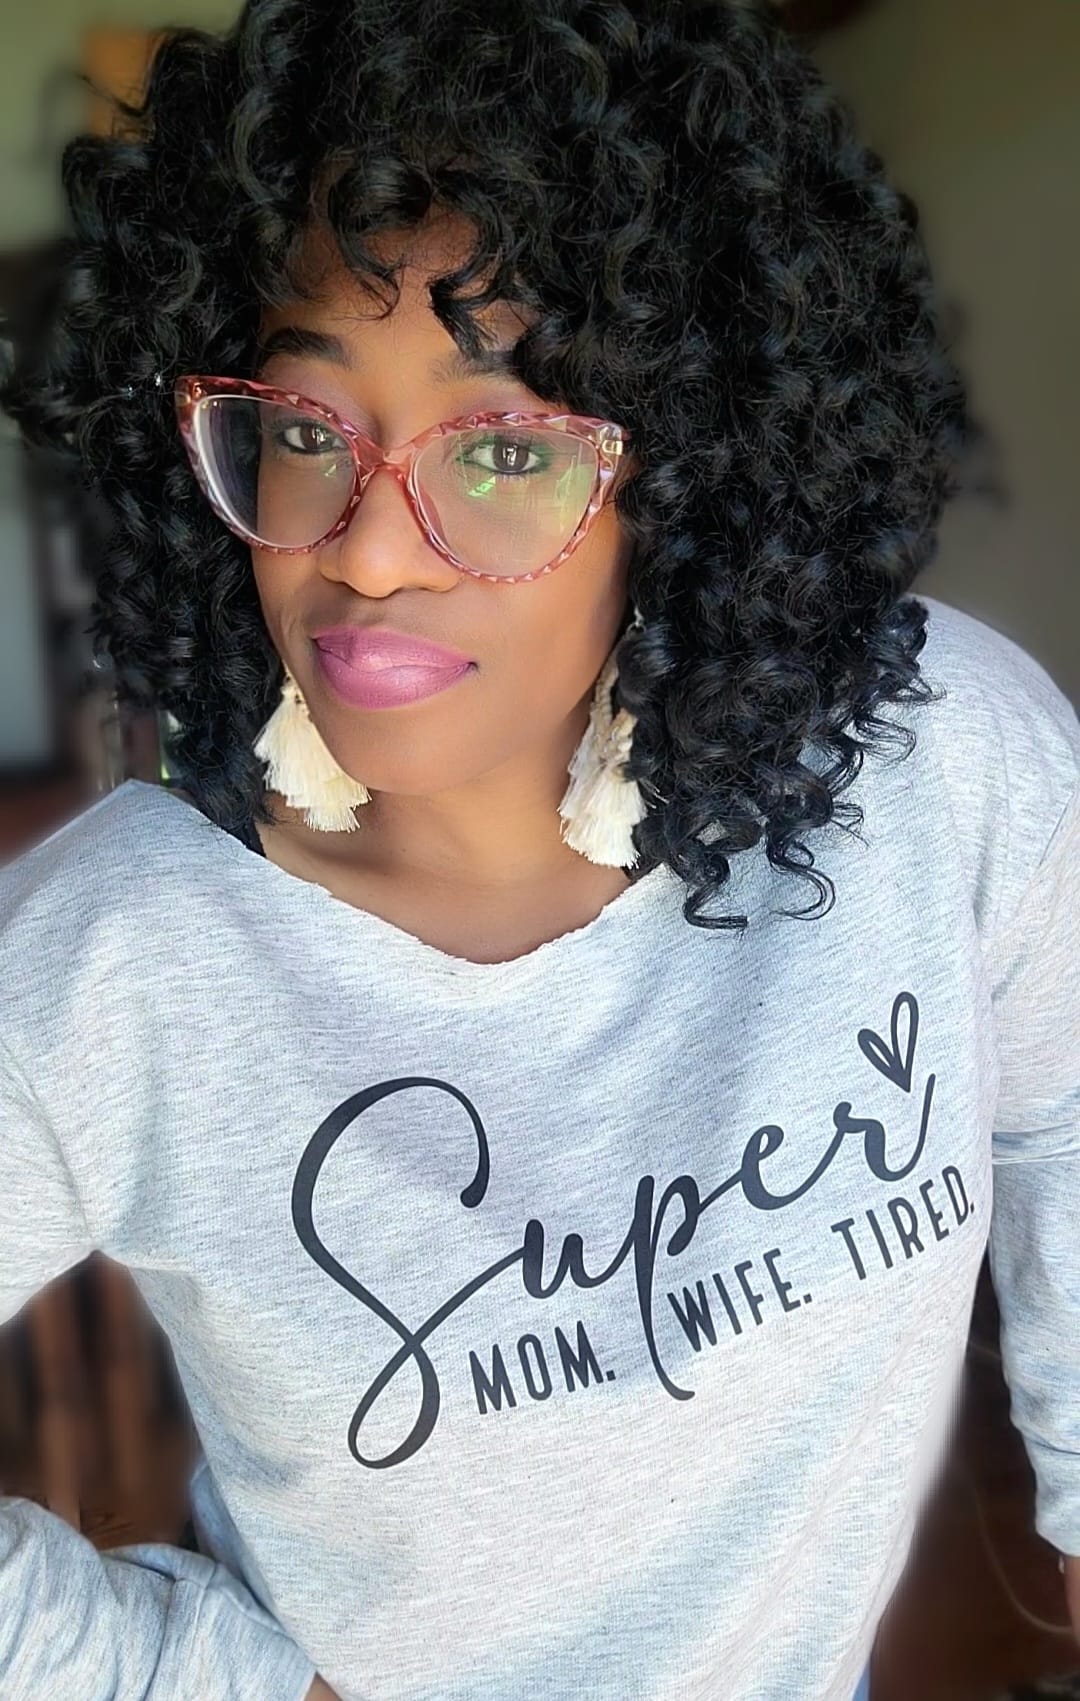 "Super Wife. Super Mom Super Tired" Sweatshirt